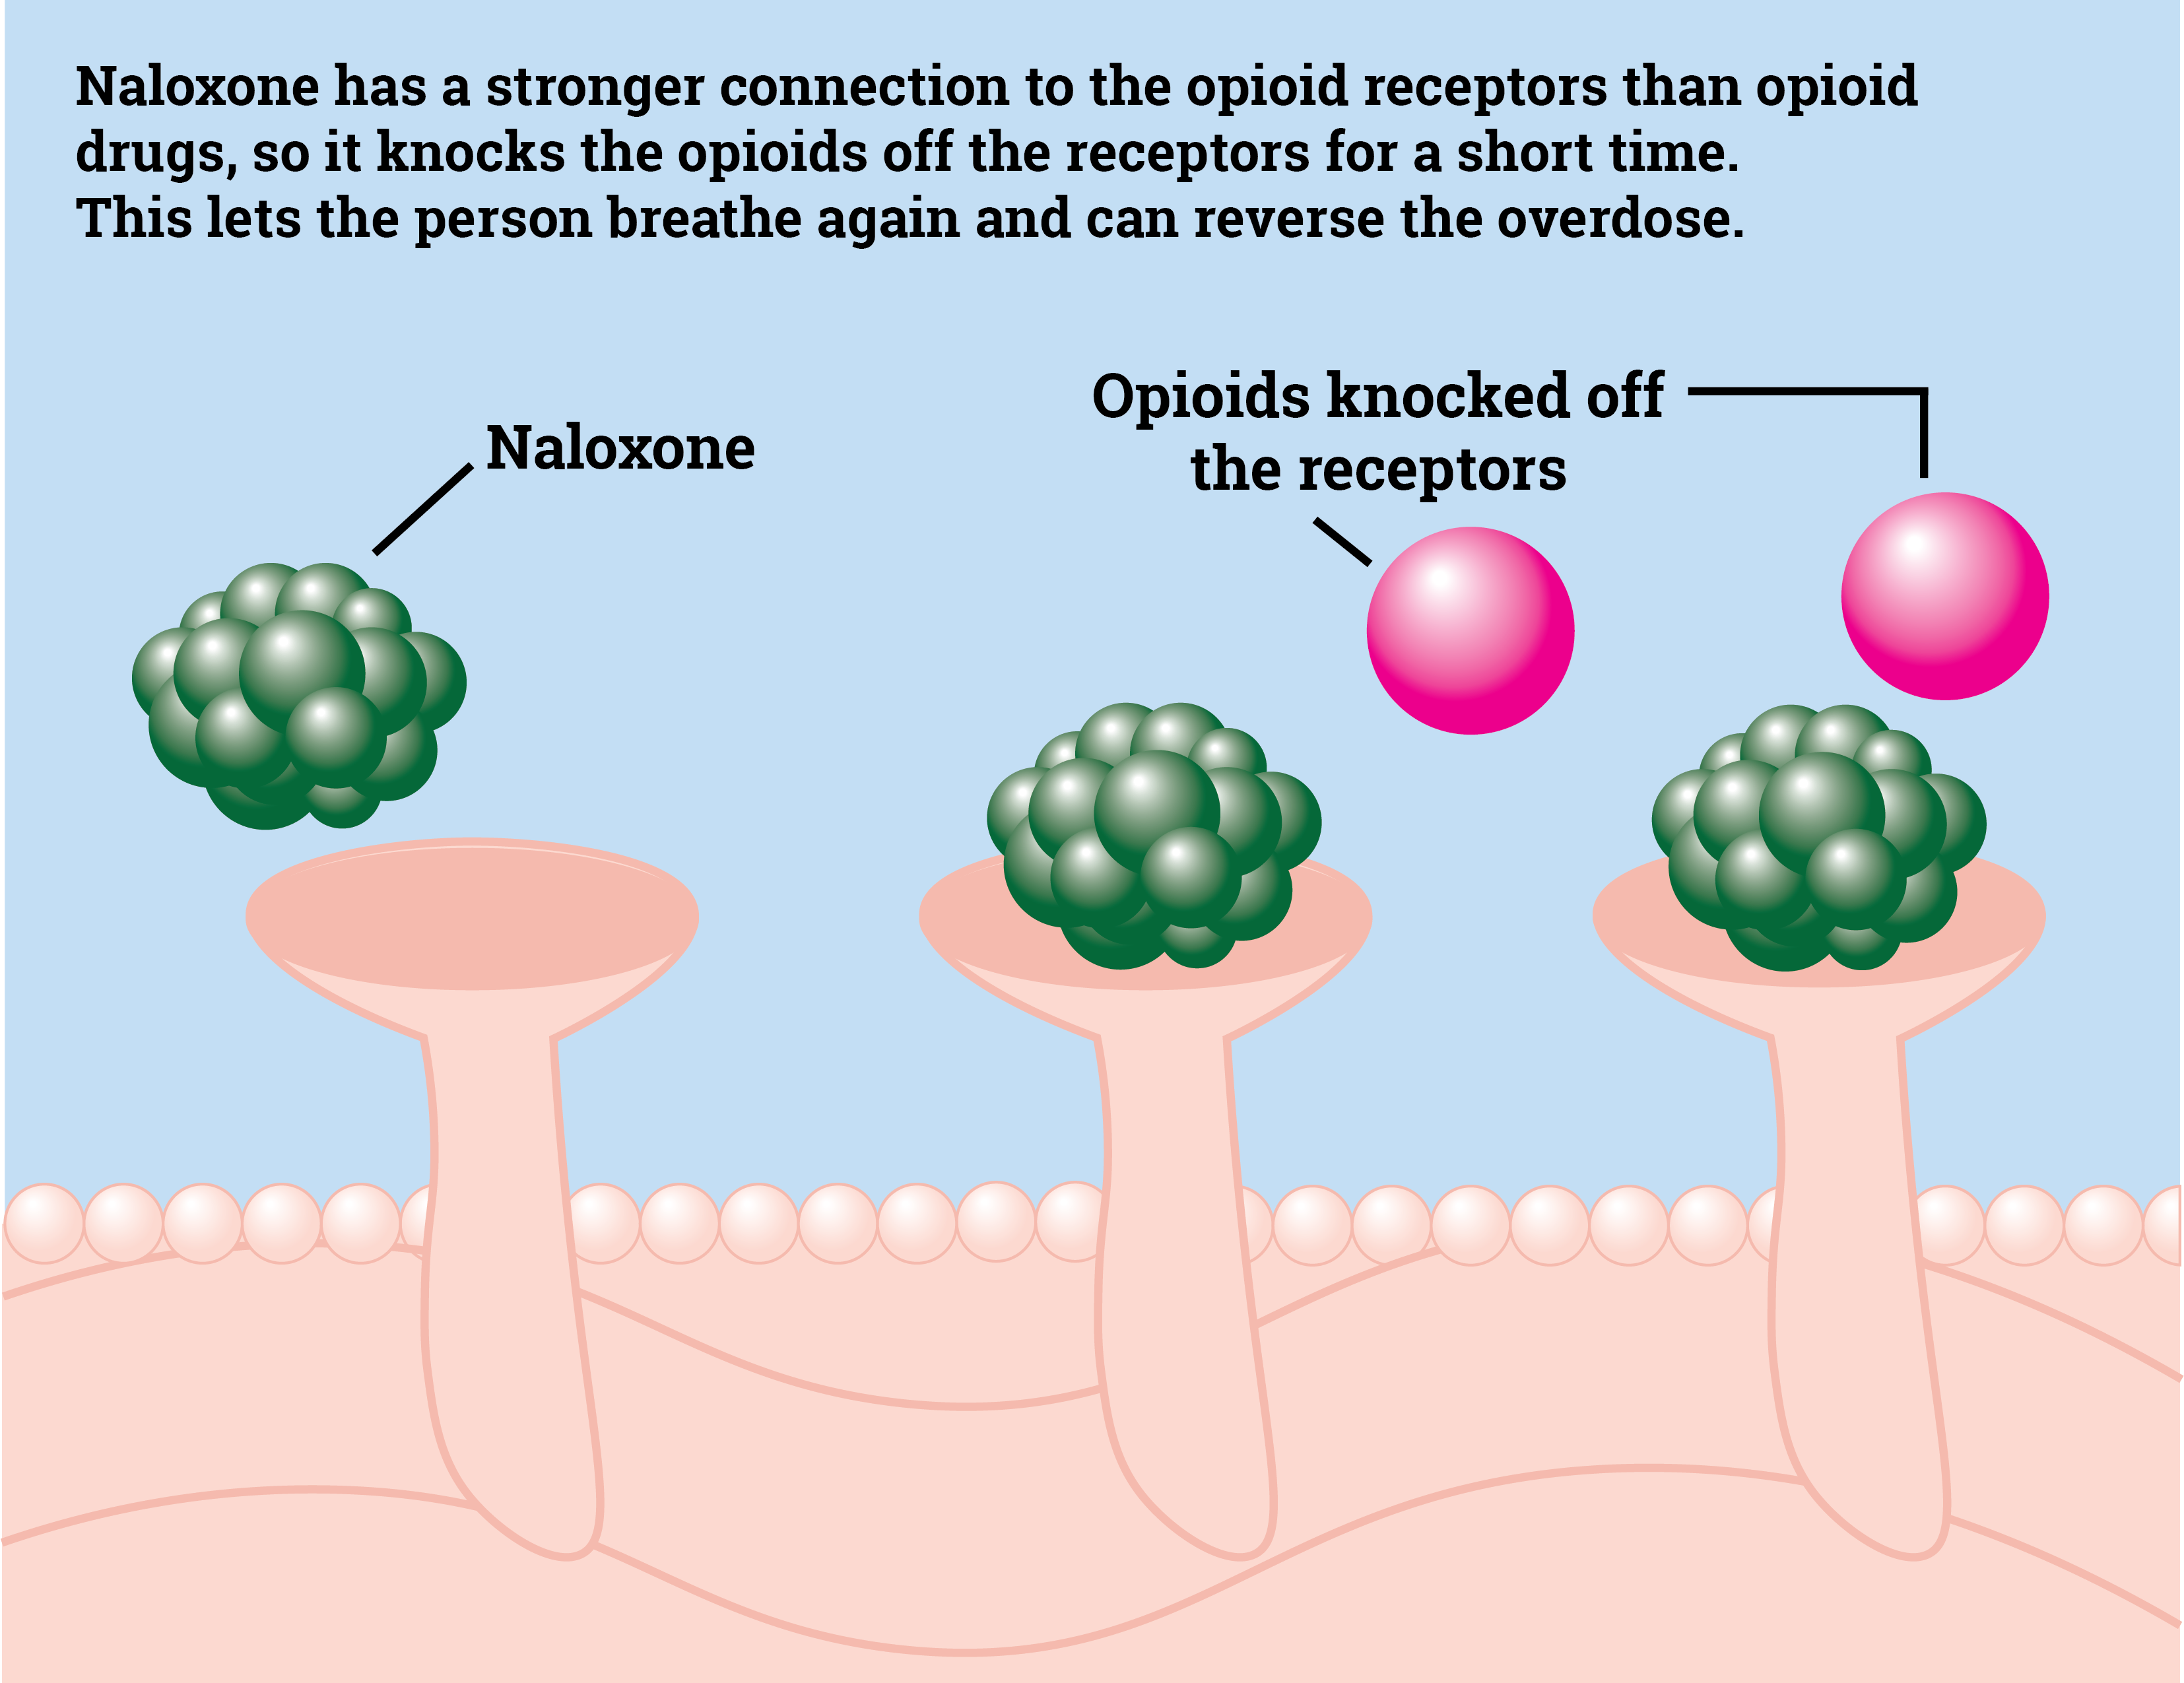 Depiction of naloxone knocking off opioids from brain receptors